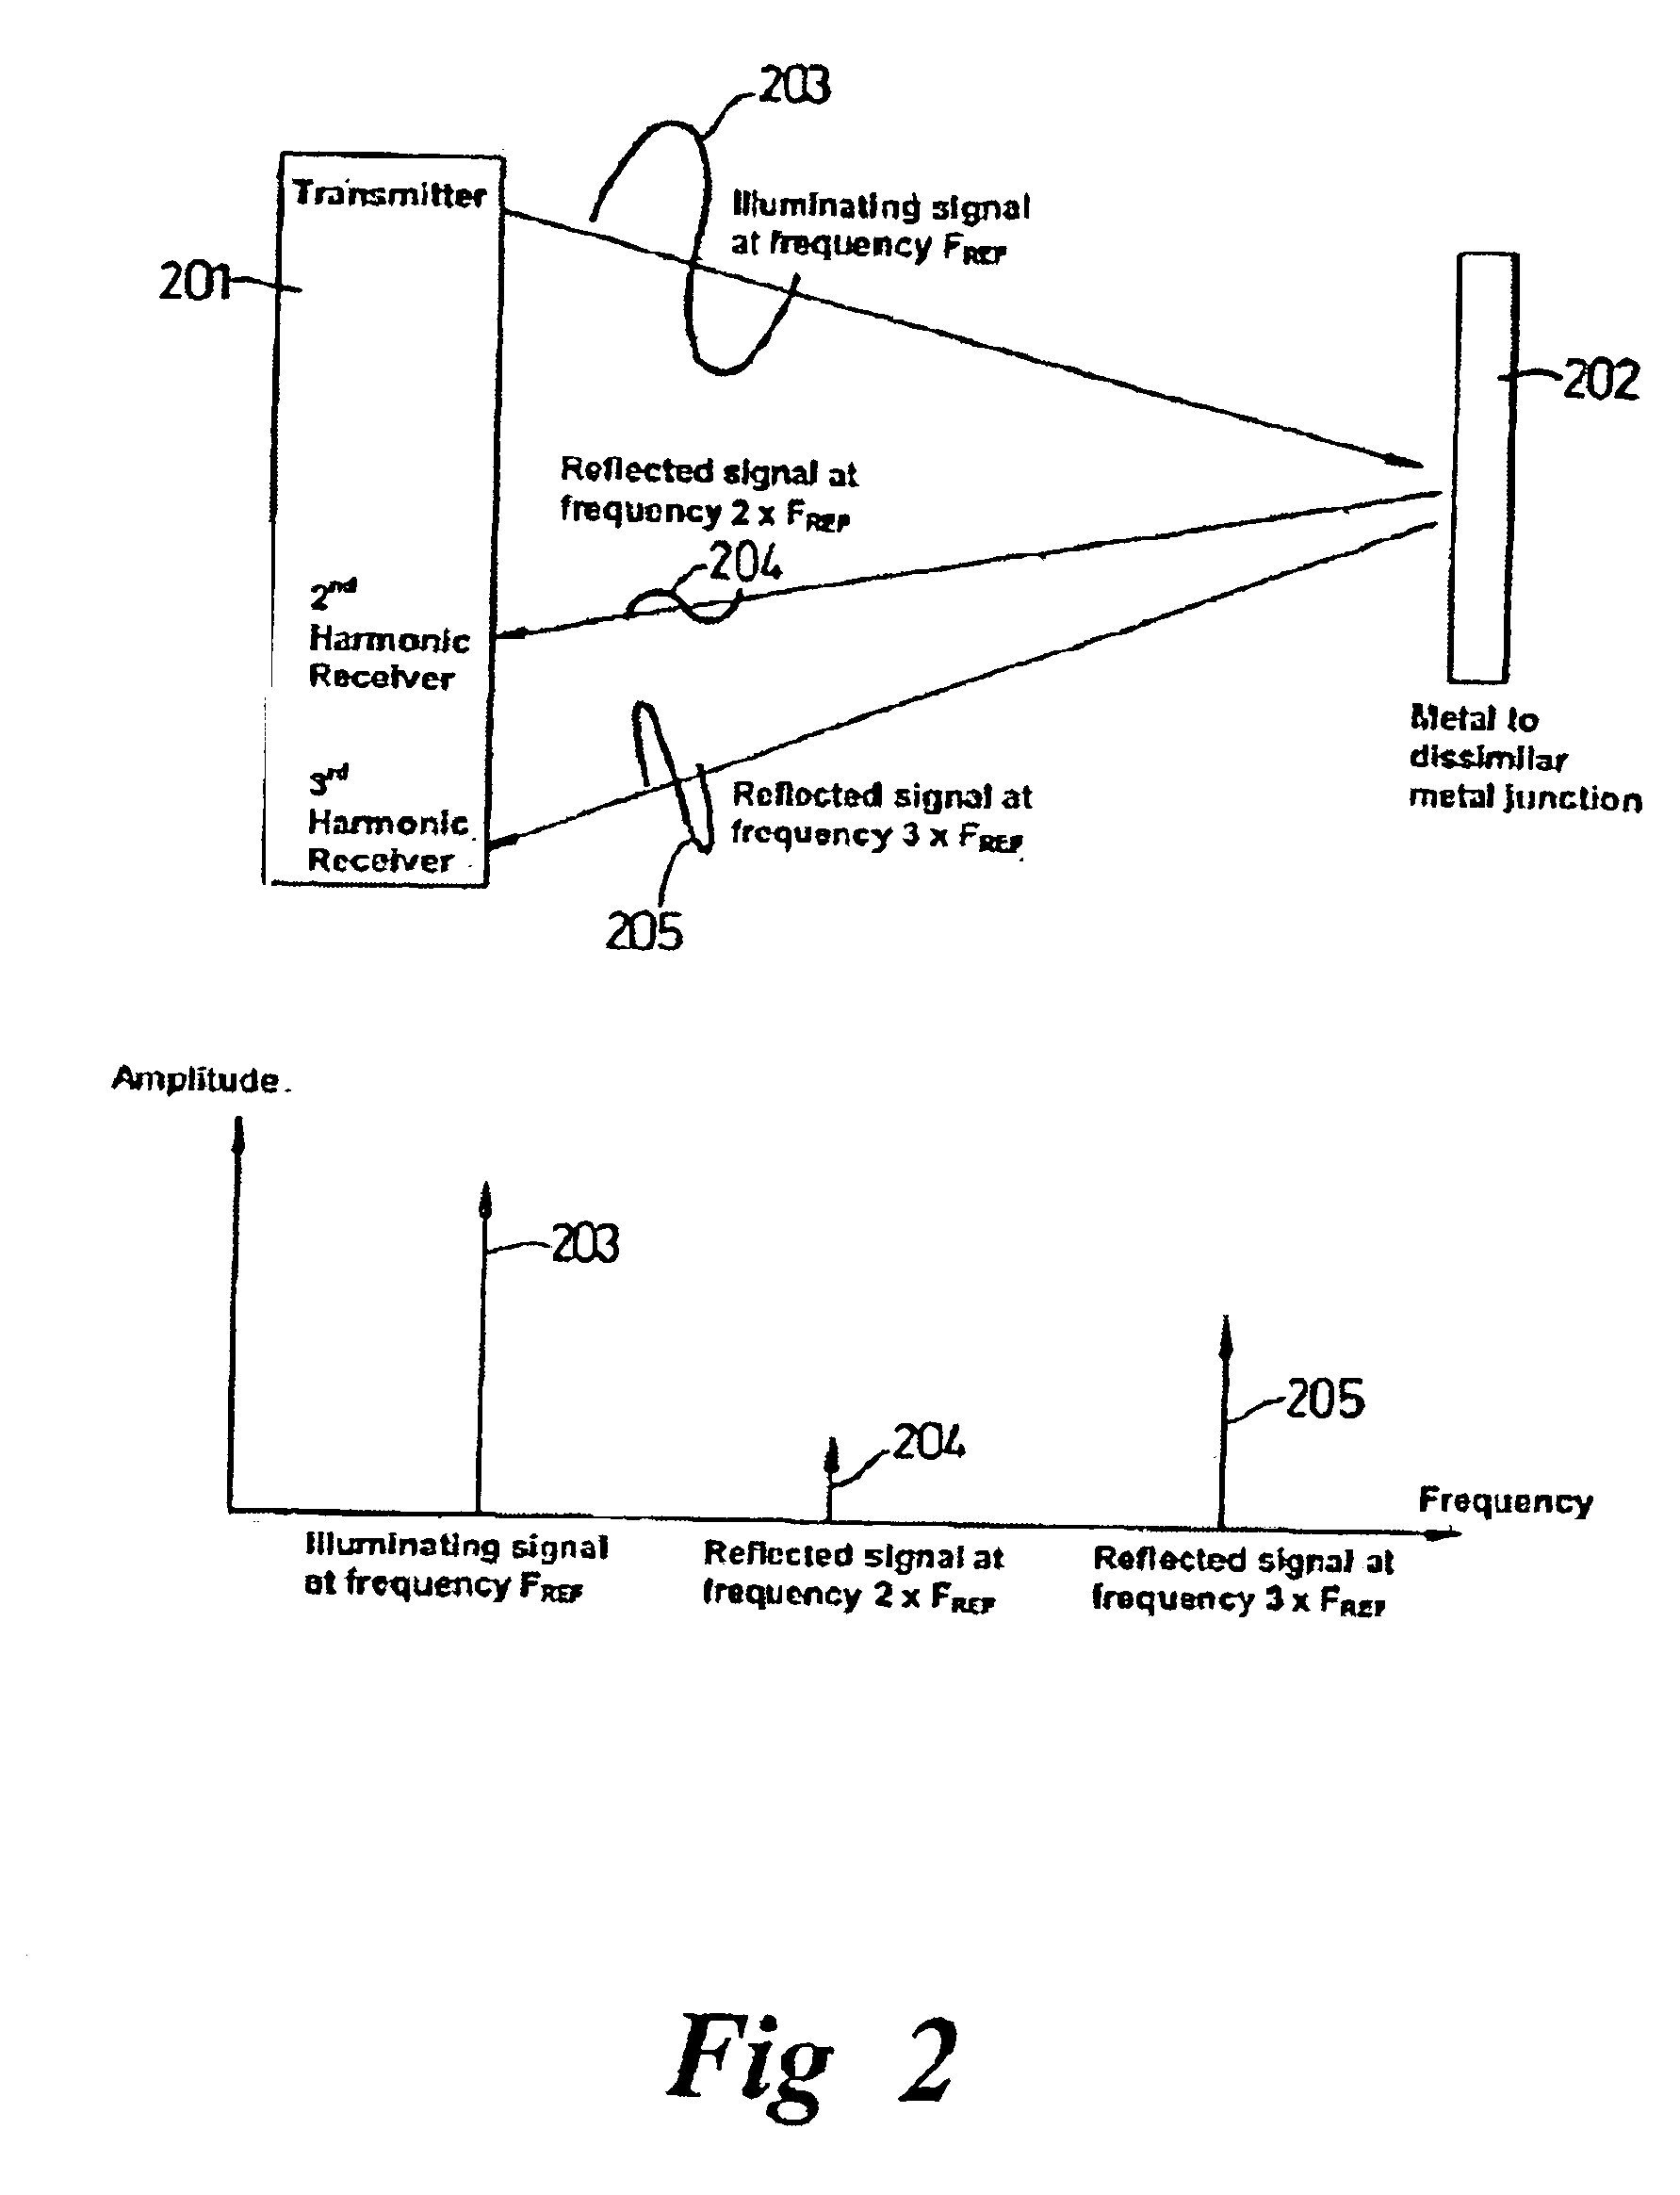 Non-linear junction detector